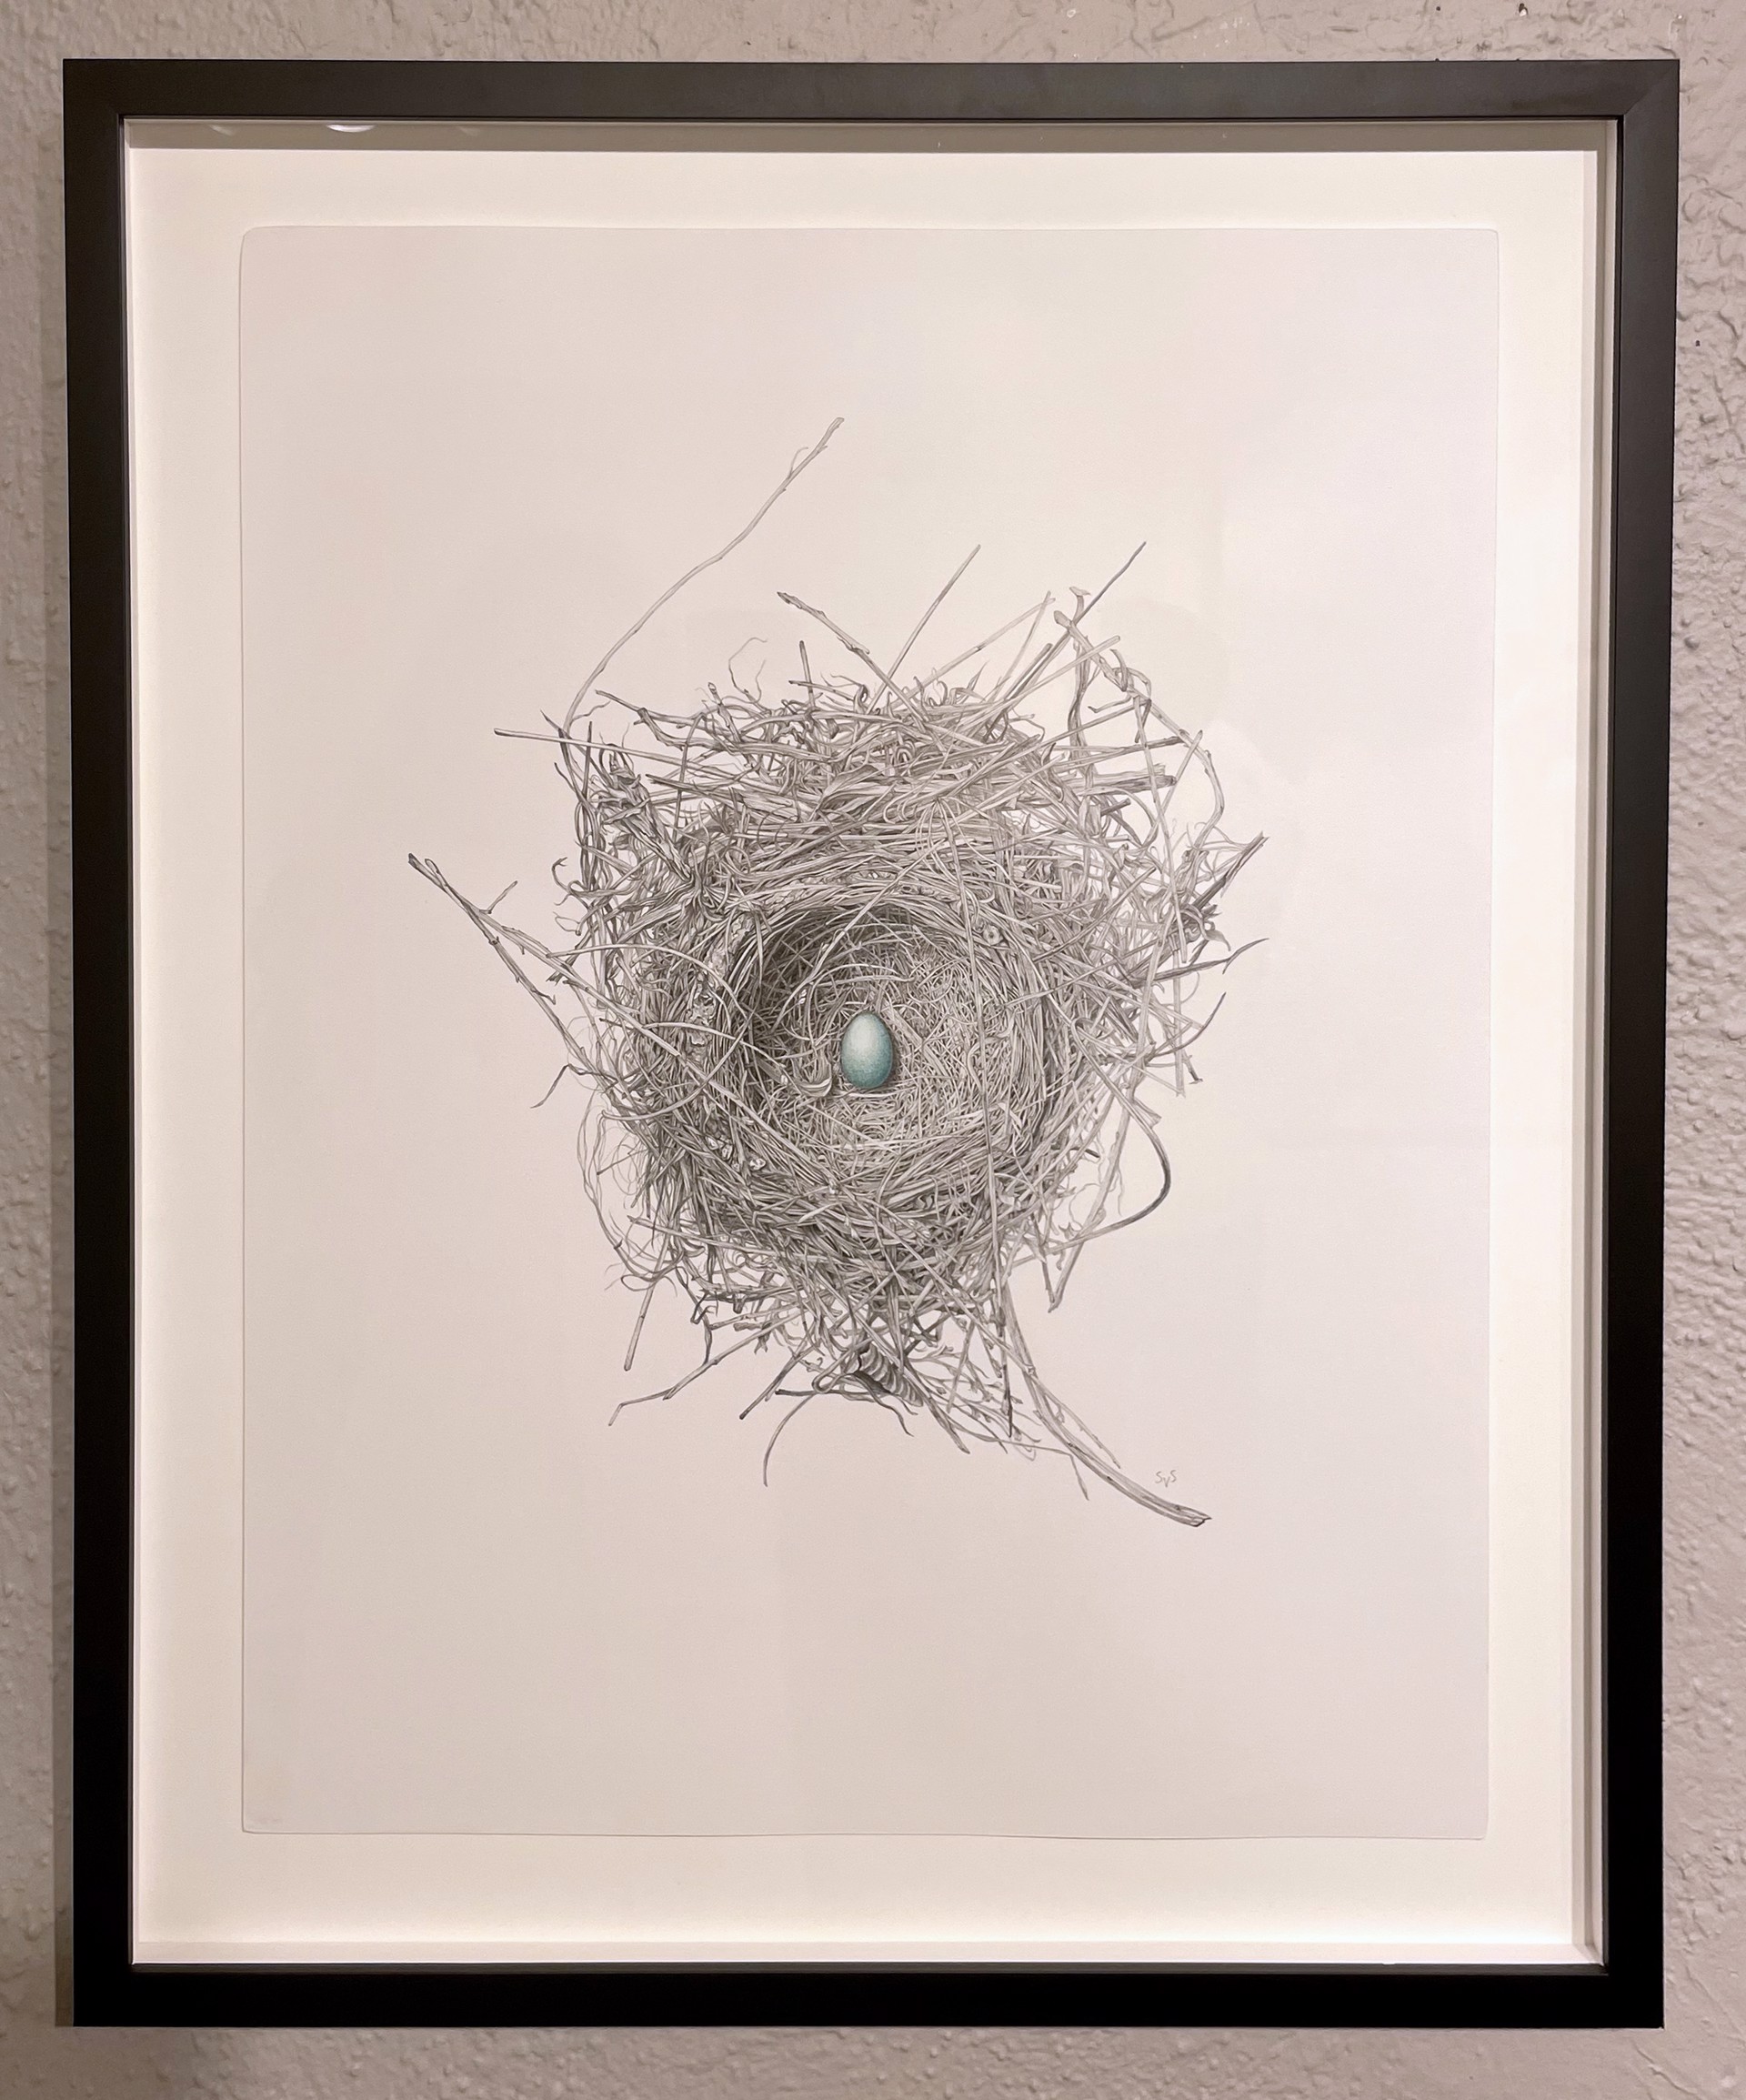 American Robin Nest and Egg by Sienna Van Slooten